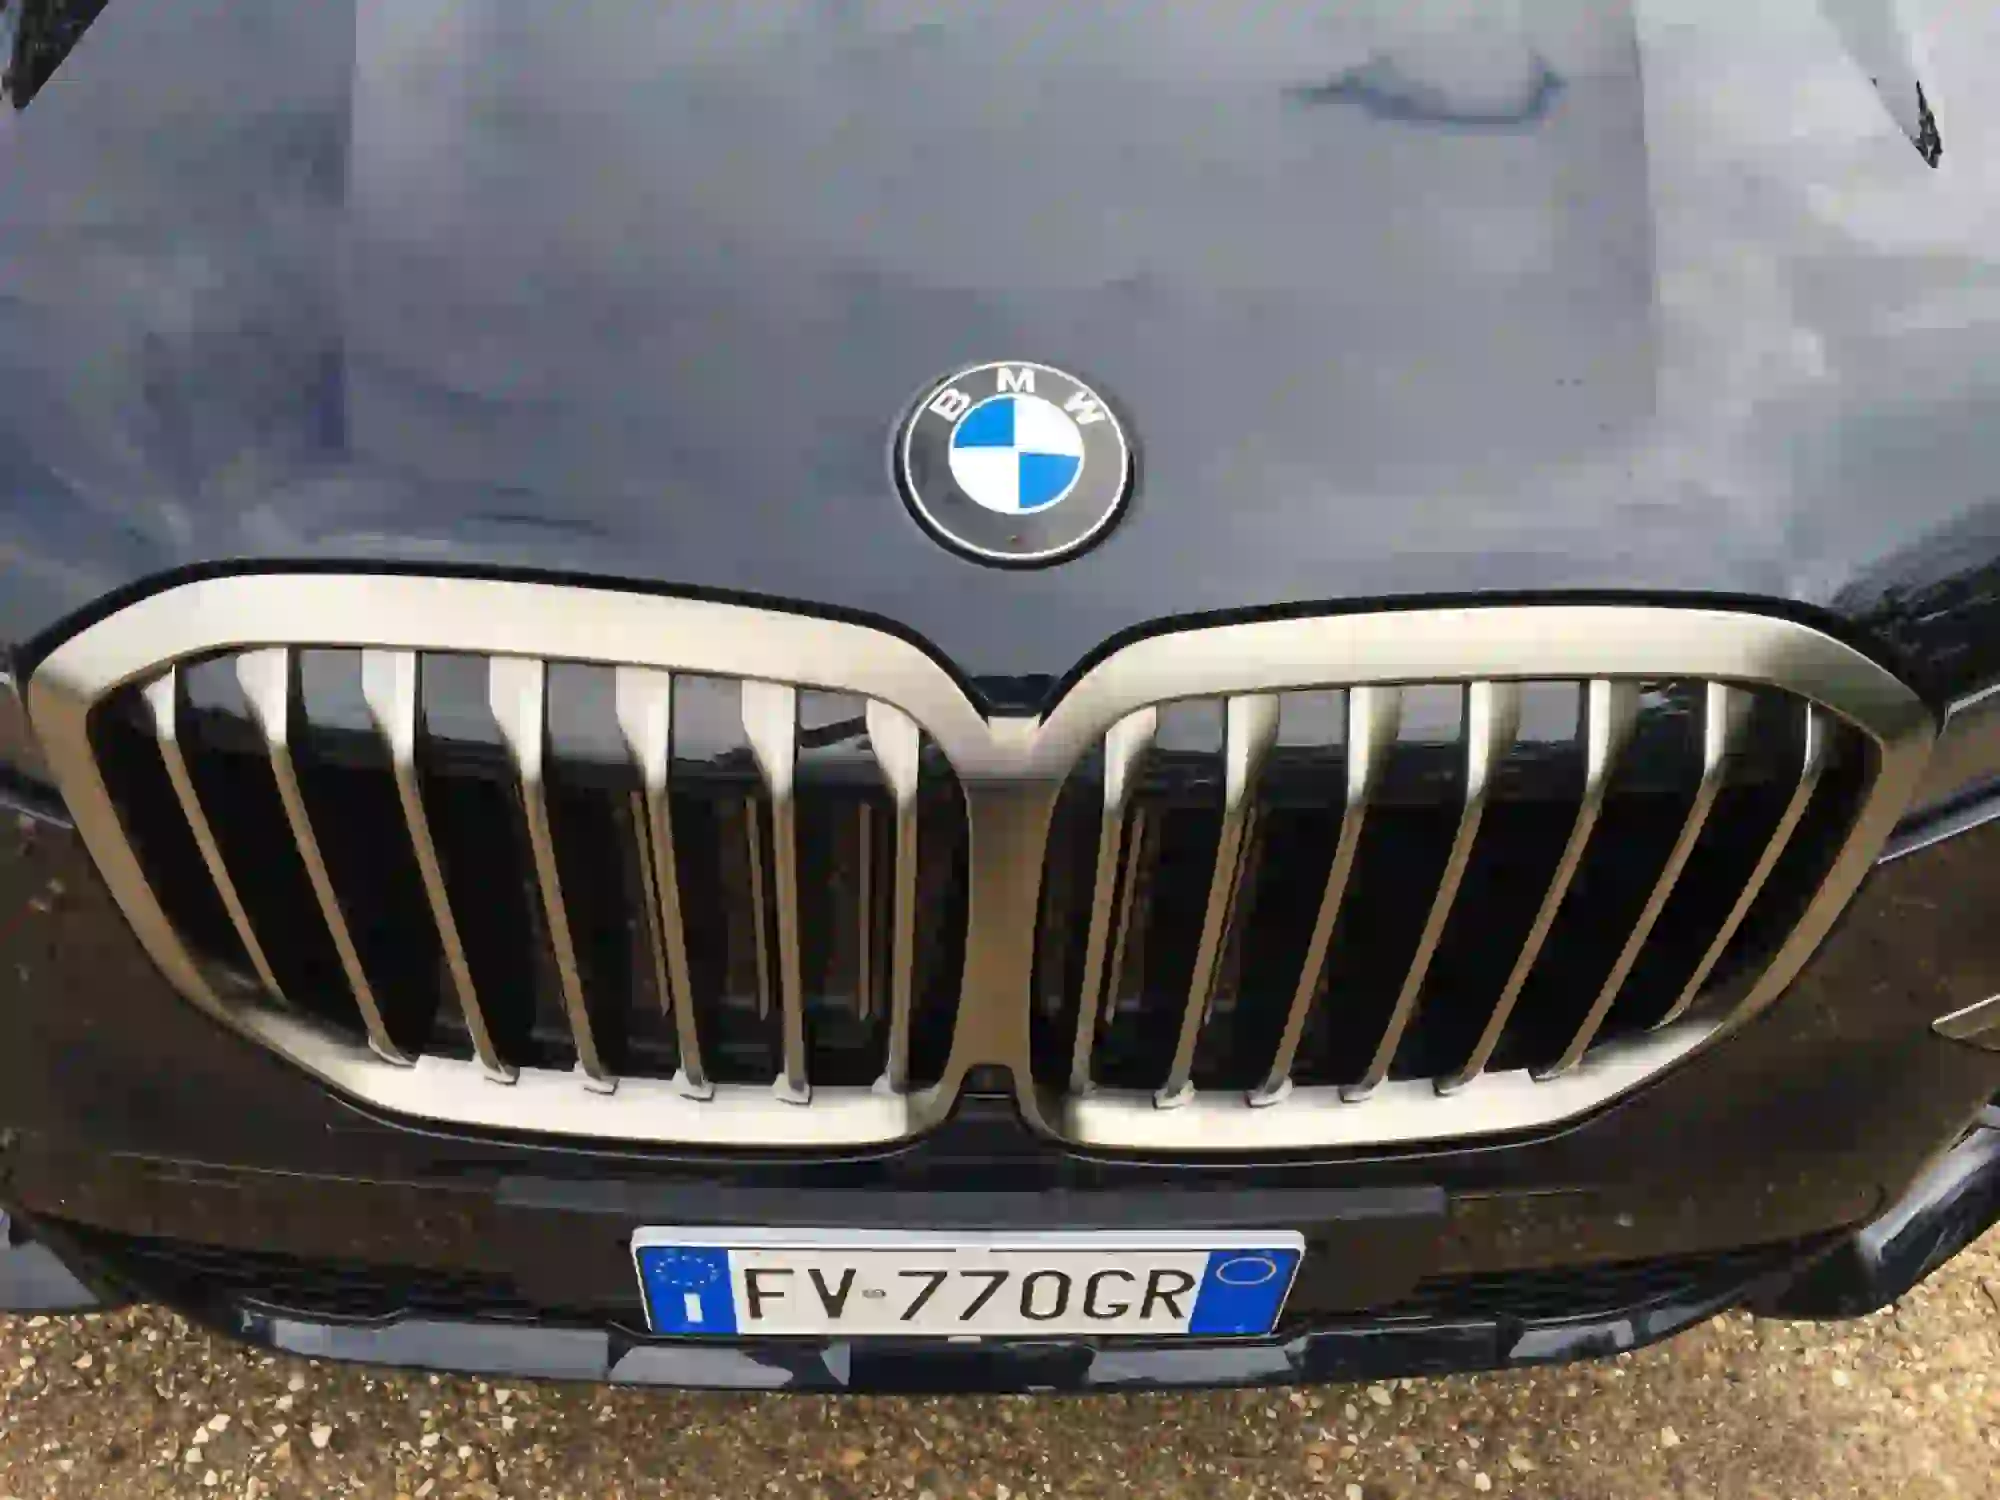 BMW X7 - Test drive Firenze-Roma - 18